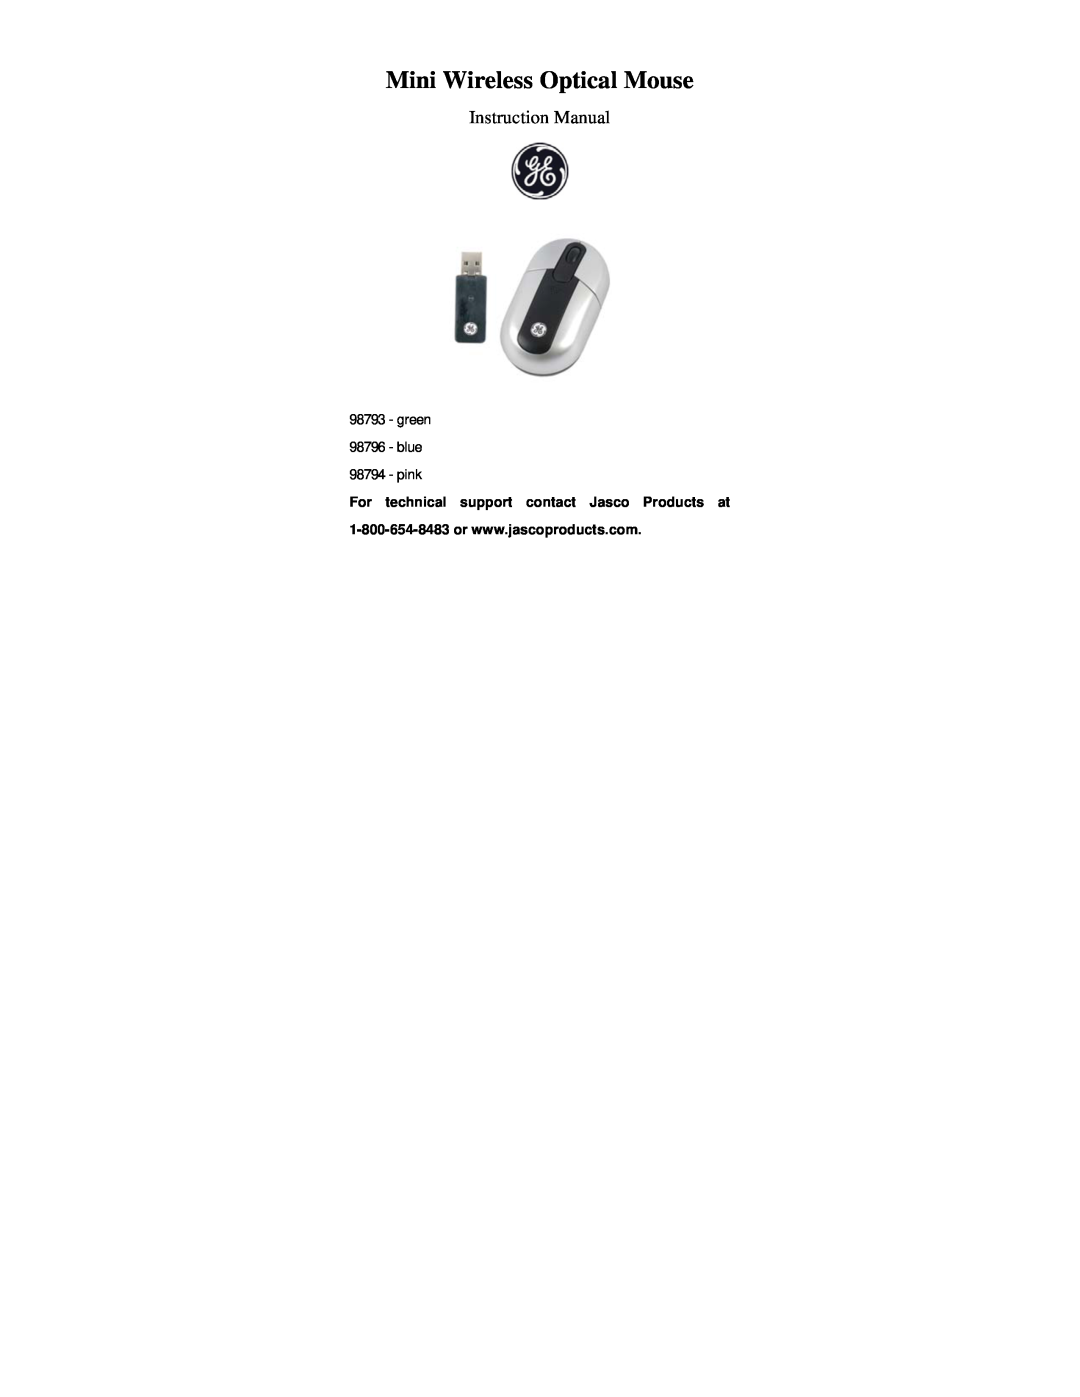 GE 98793 instruction manual Mini Wireless Optical Mouse, Instruction Manual, green 98796 - blue 98794 - pink 